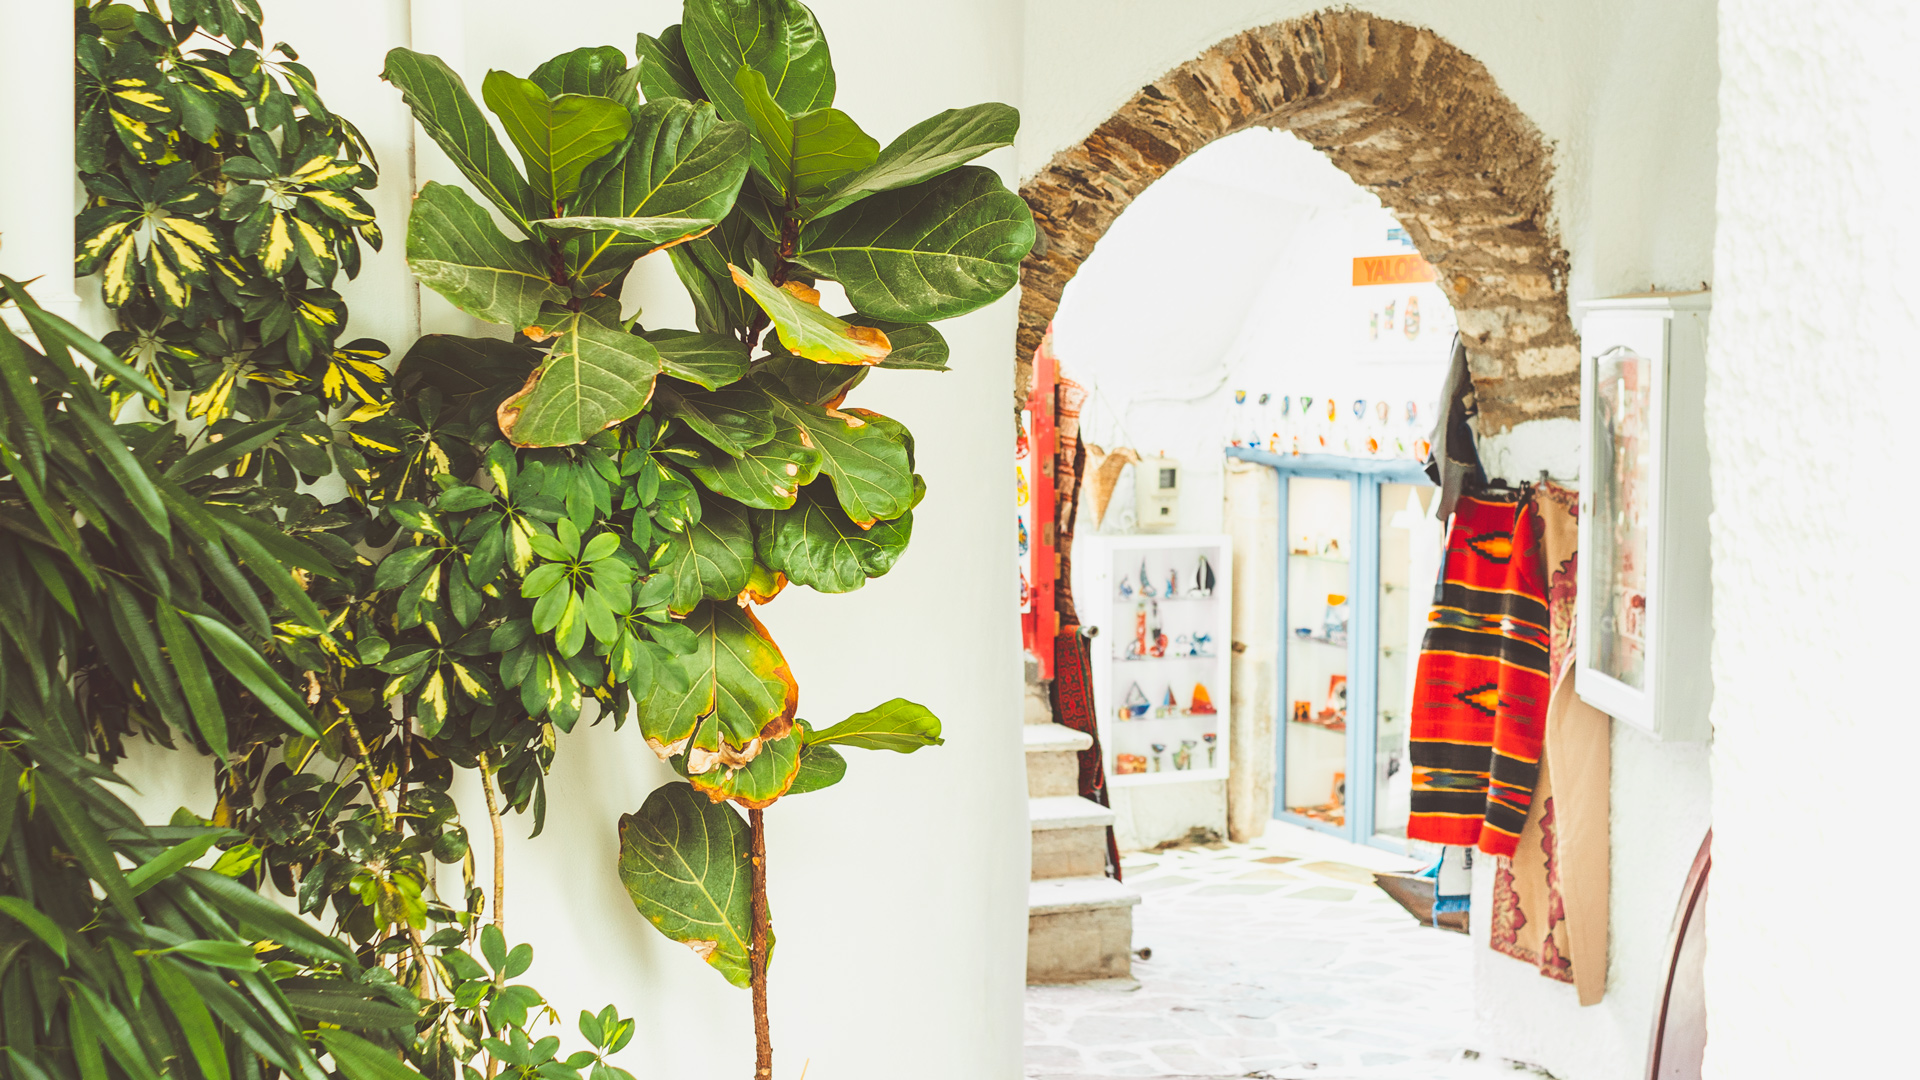 Enjoy how Venetian and Catholic elements merge into the classic Cycladic architecture of Naxos